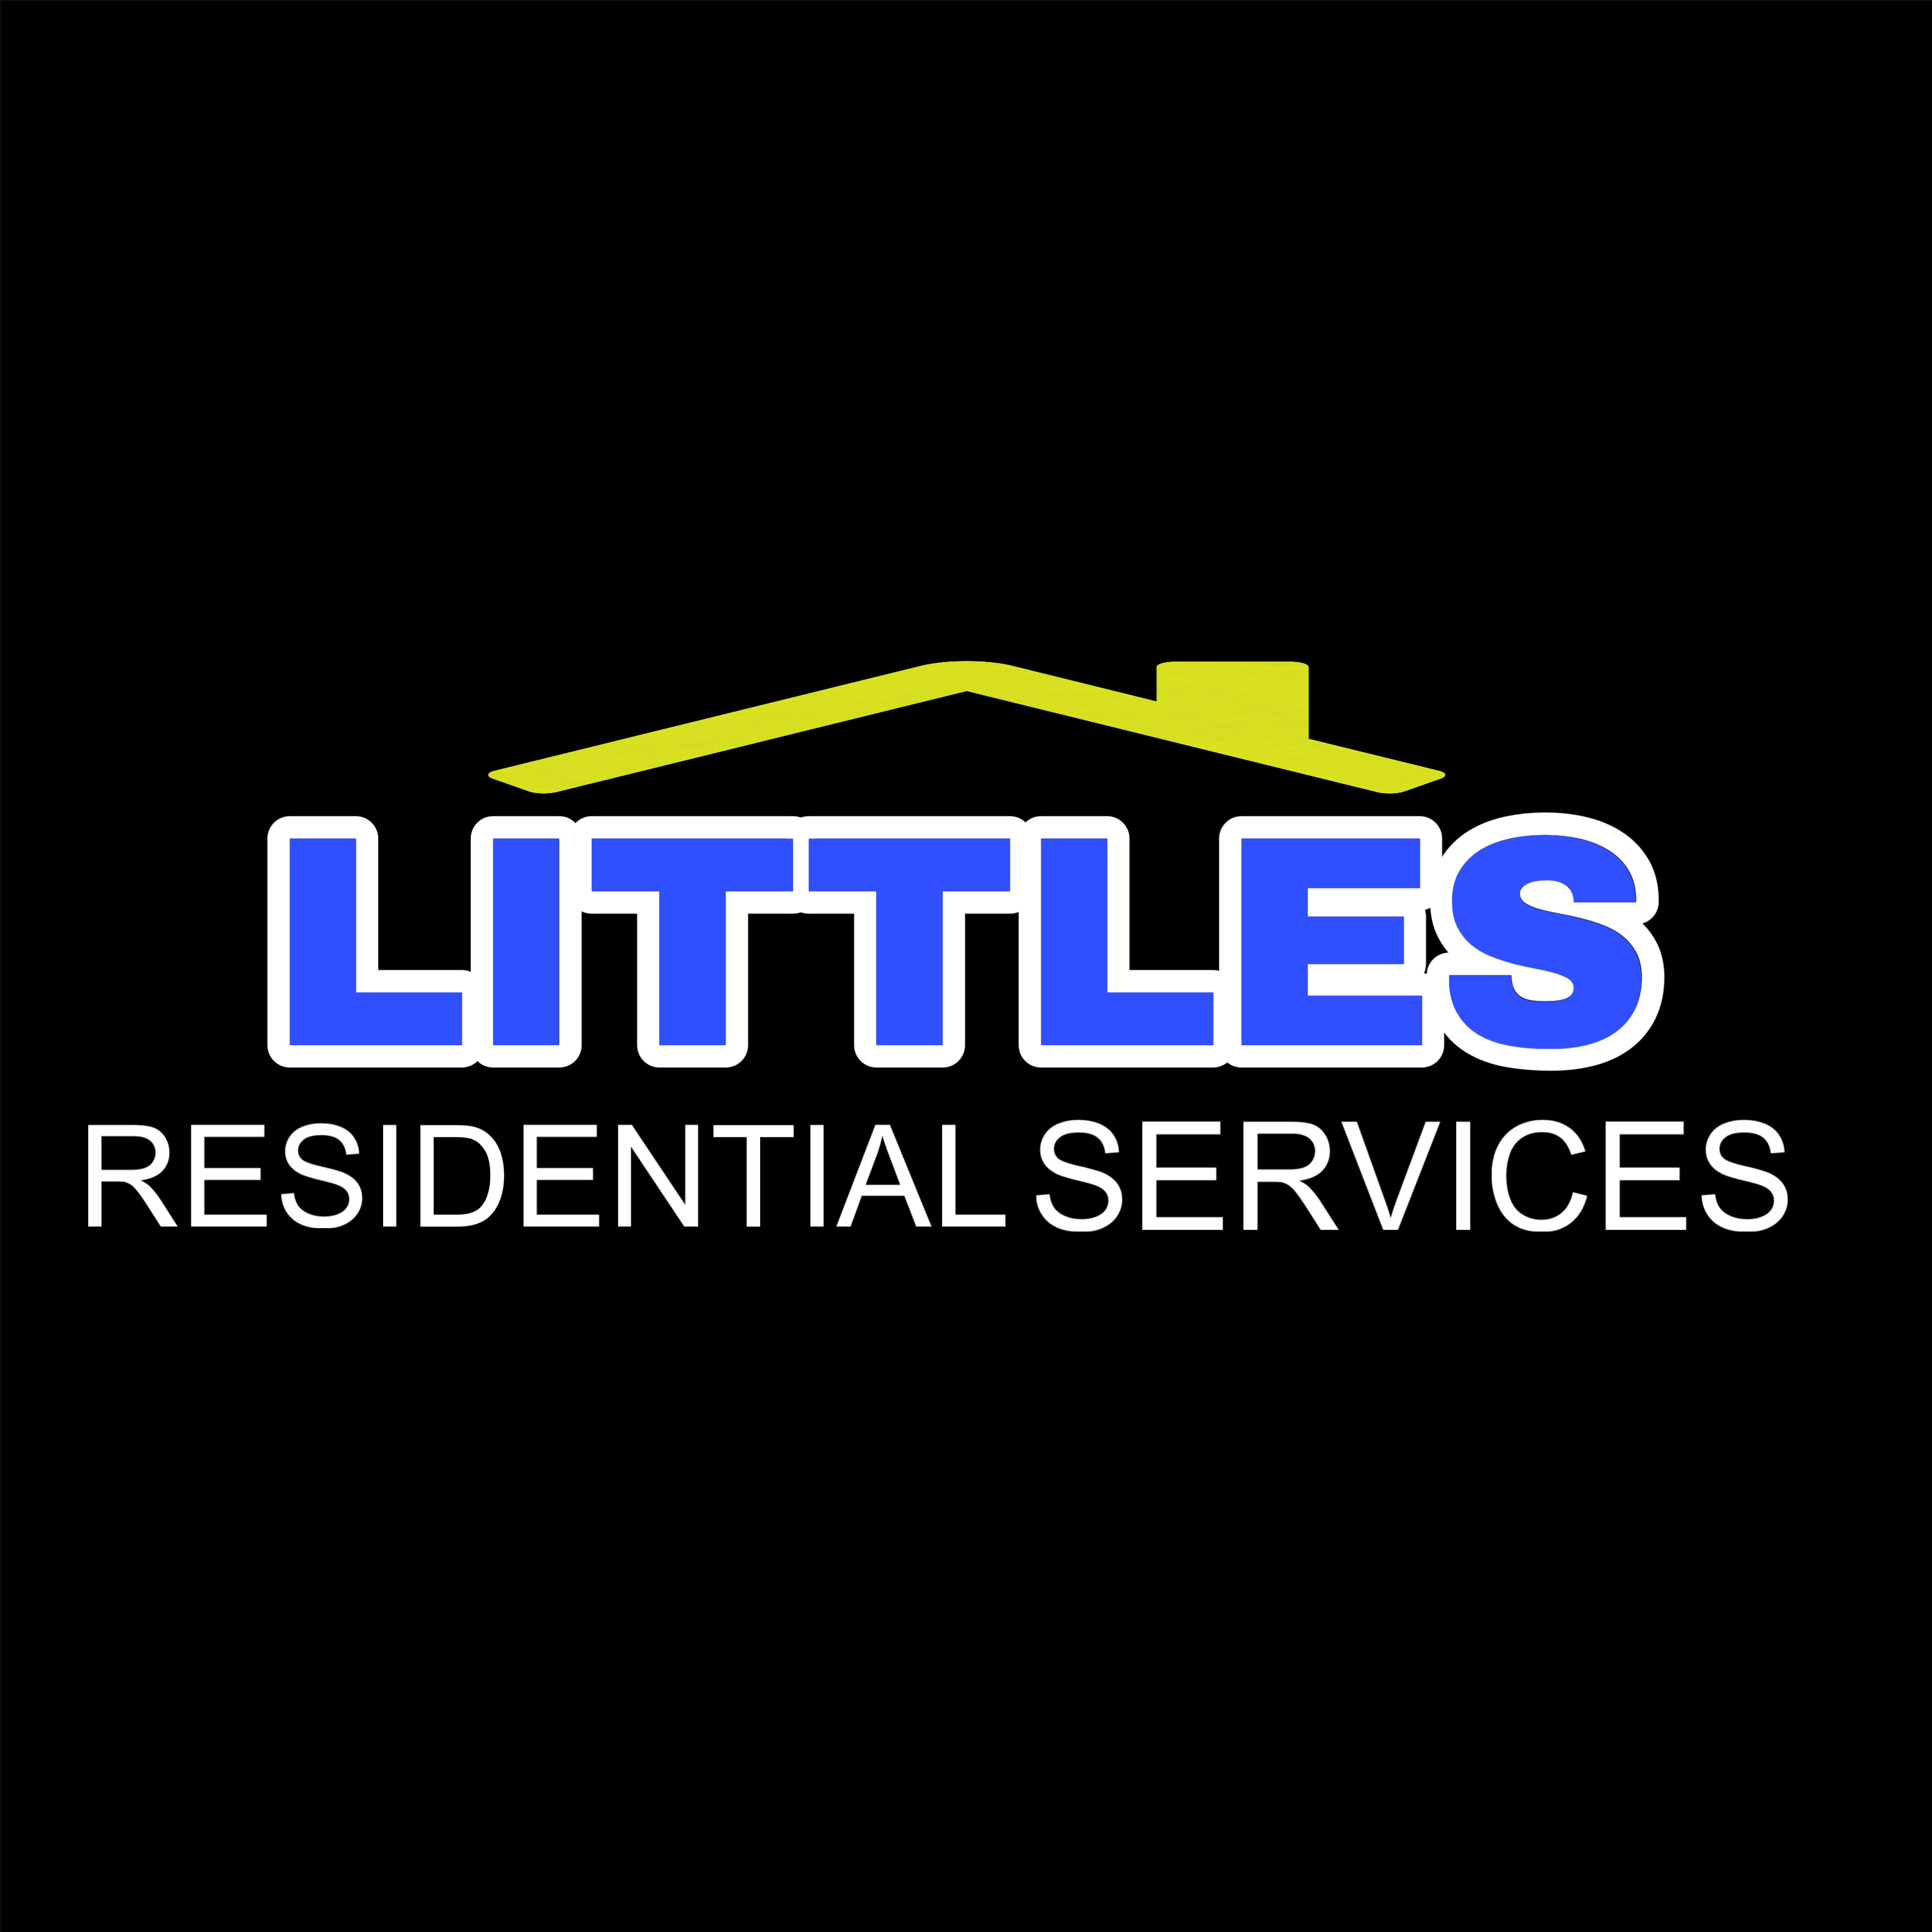 Littles Residential Services LLC Logo